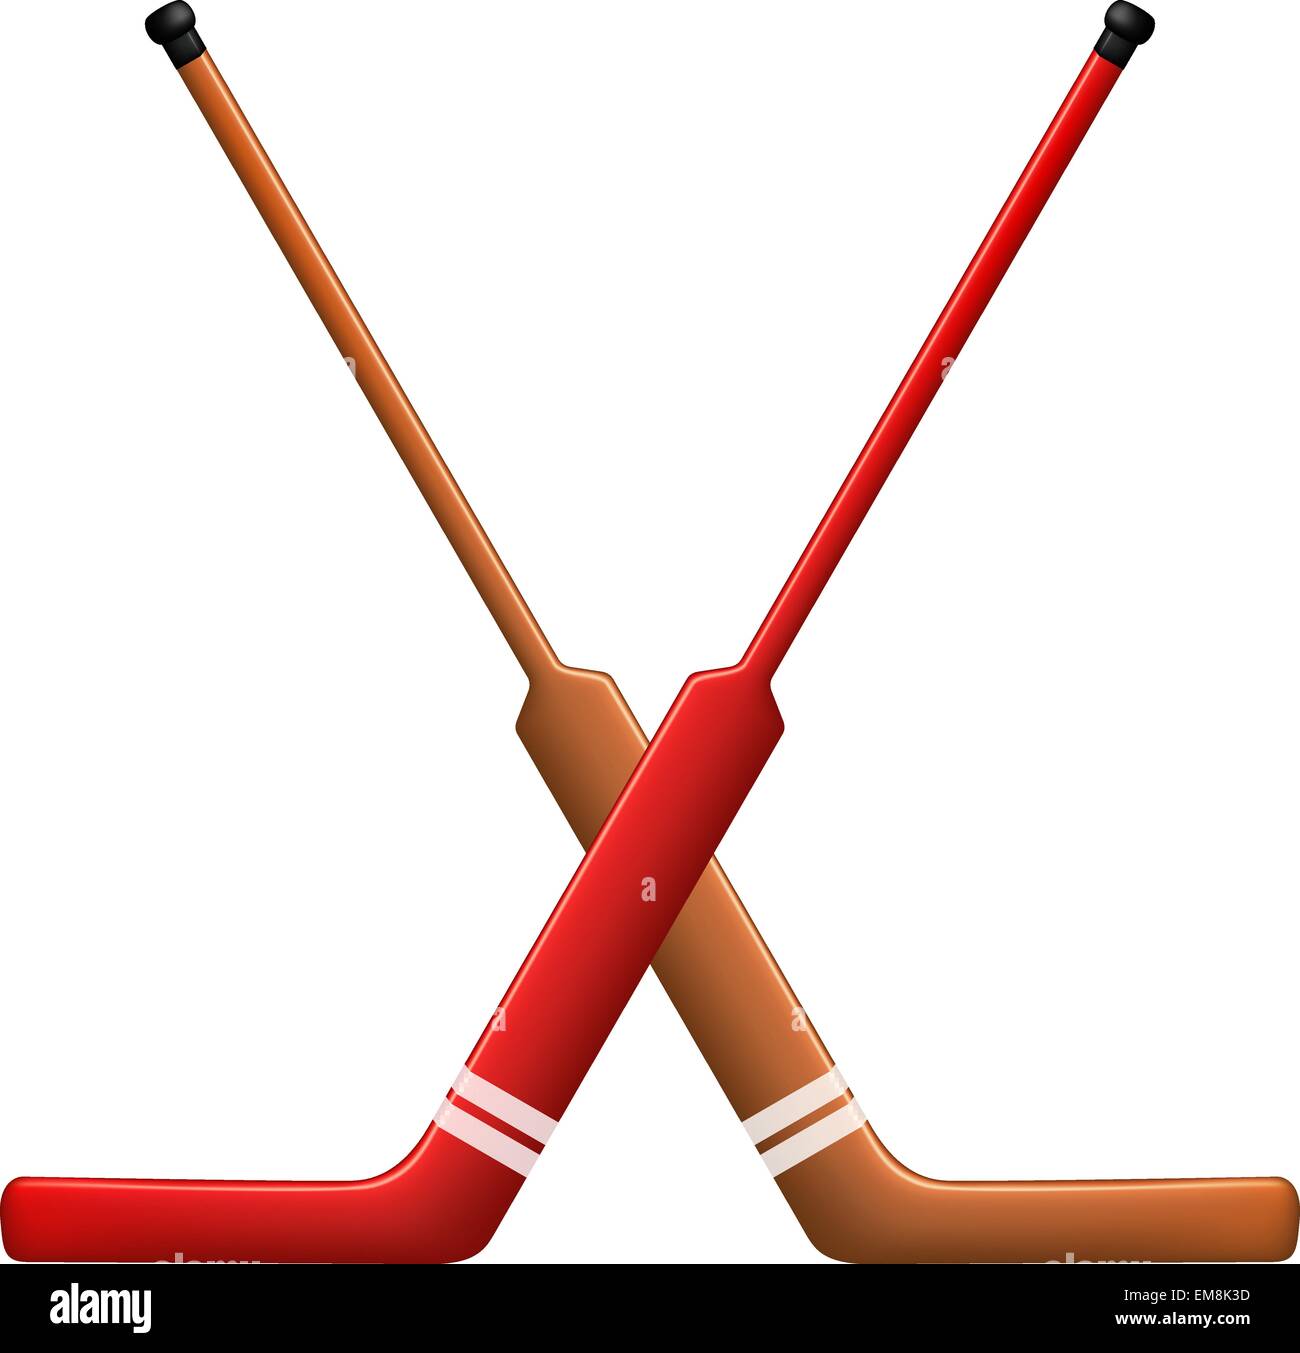 Louisville Blades – Vintage Ice Hockey